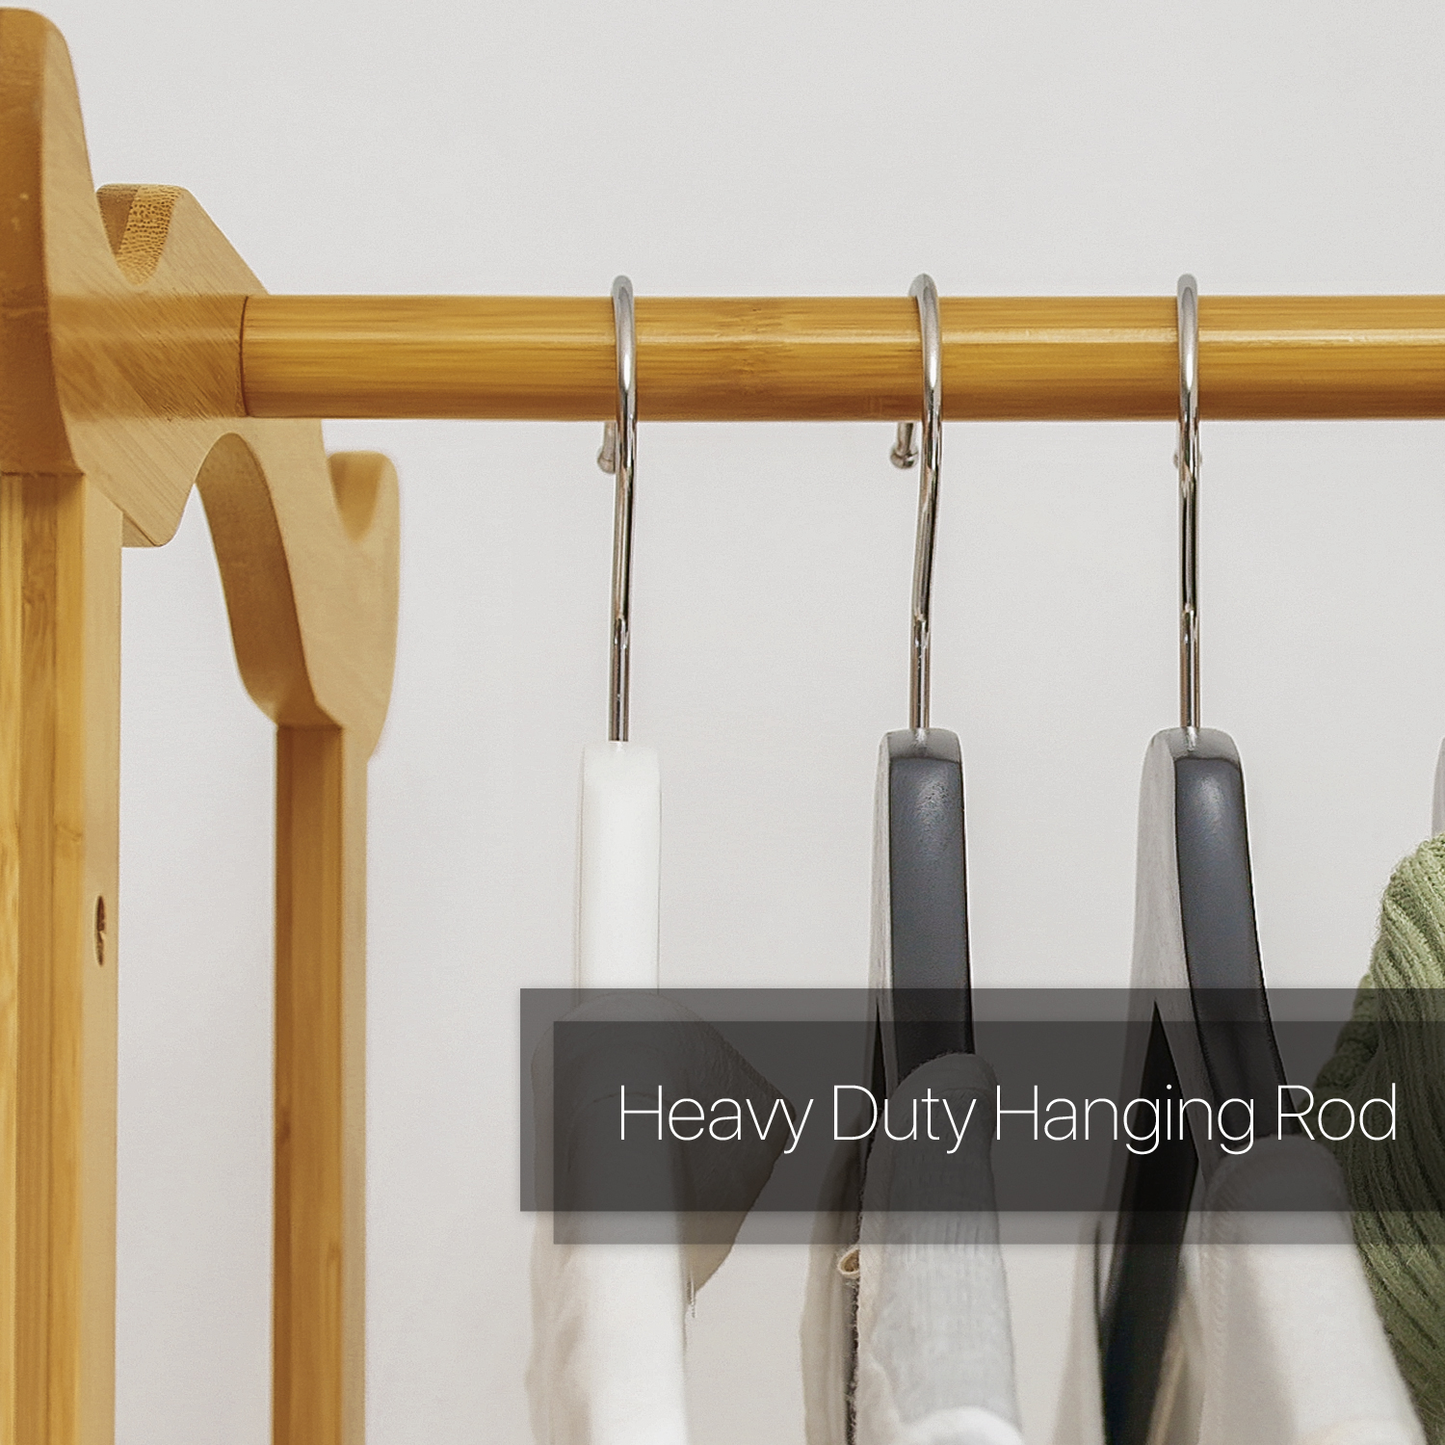 Garment Hanging Stand Rack - Double Door - with Drawer